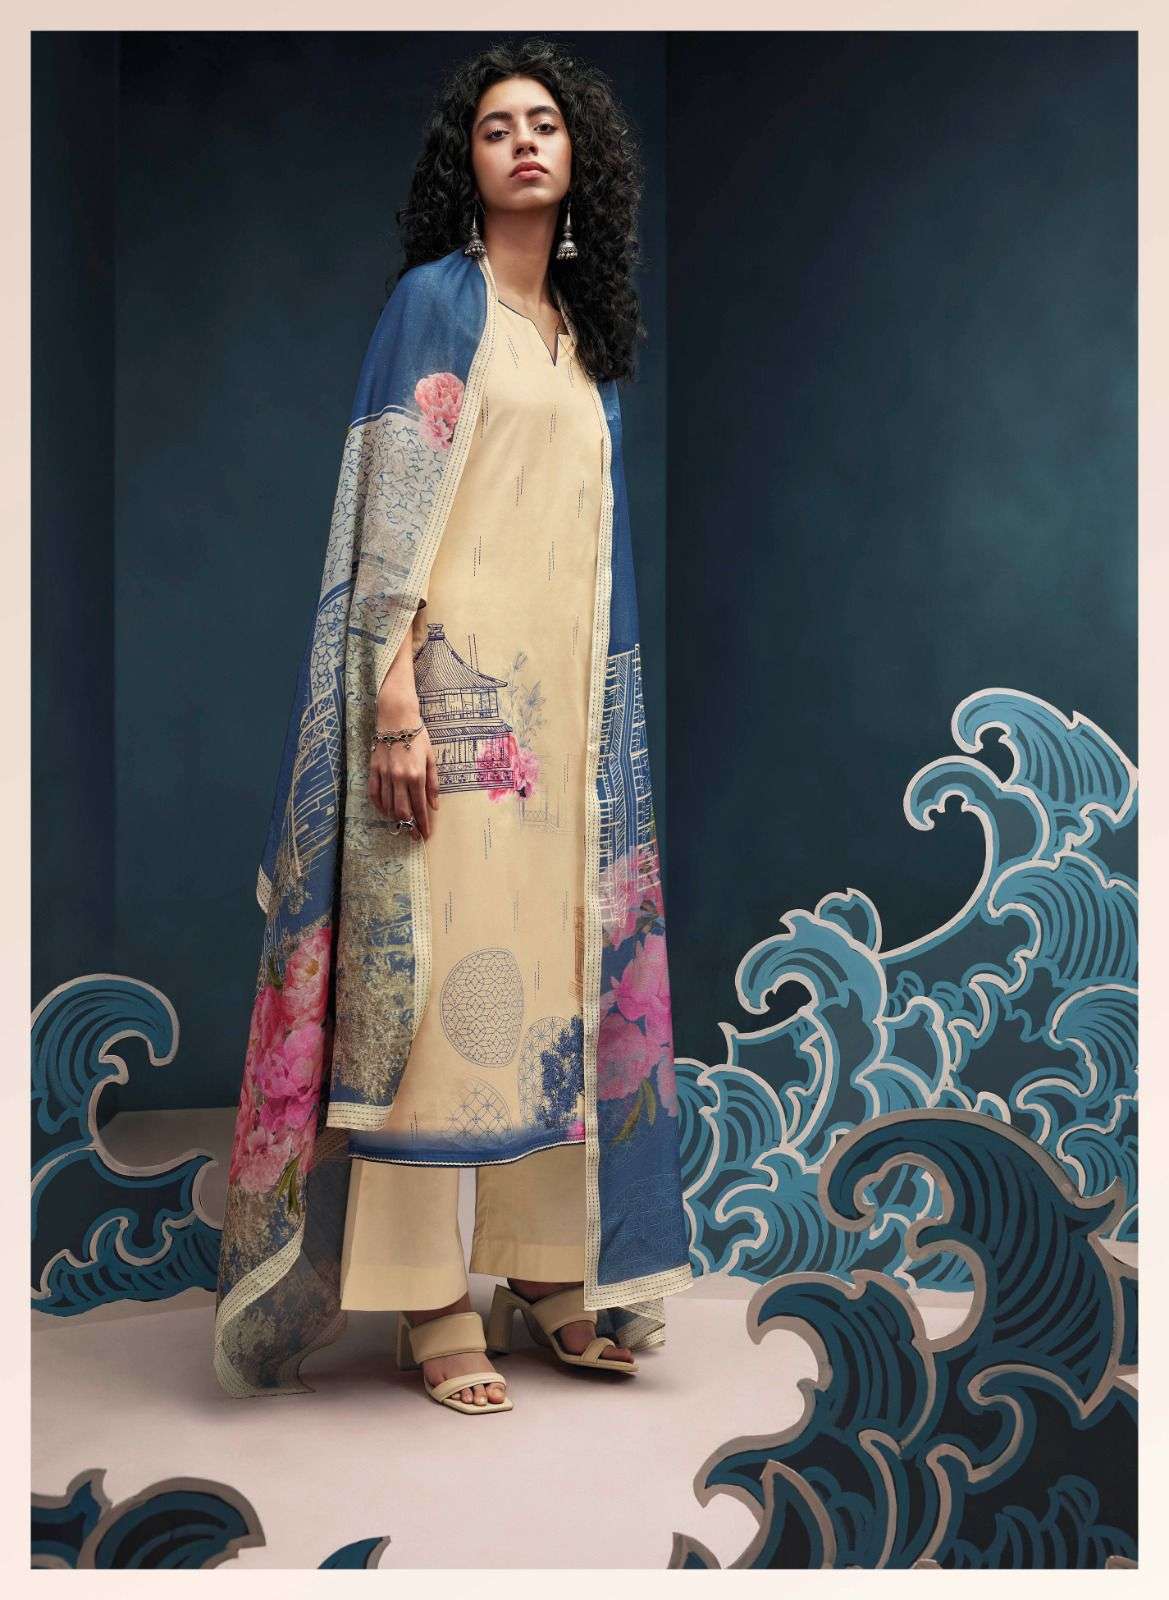 ganga meryan 1390-1395 series exclusive designer salwar suits catalogue online dealer surat 